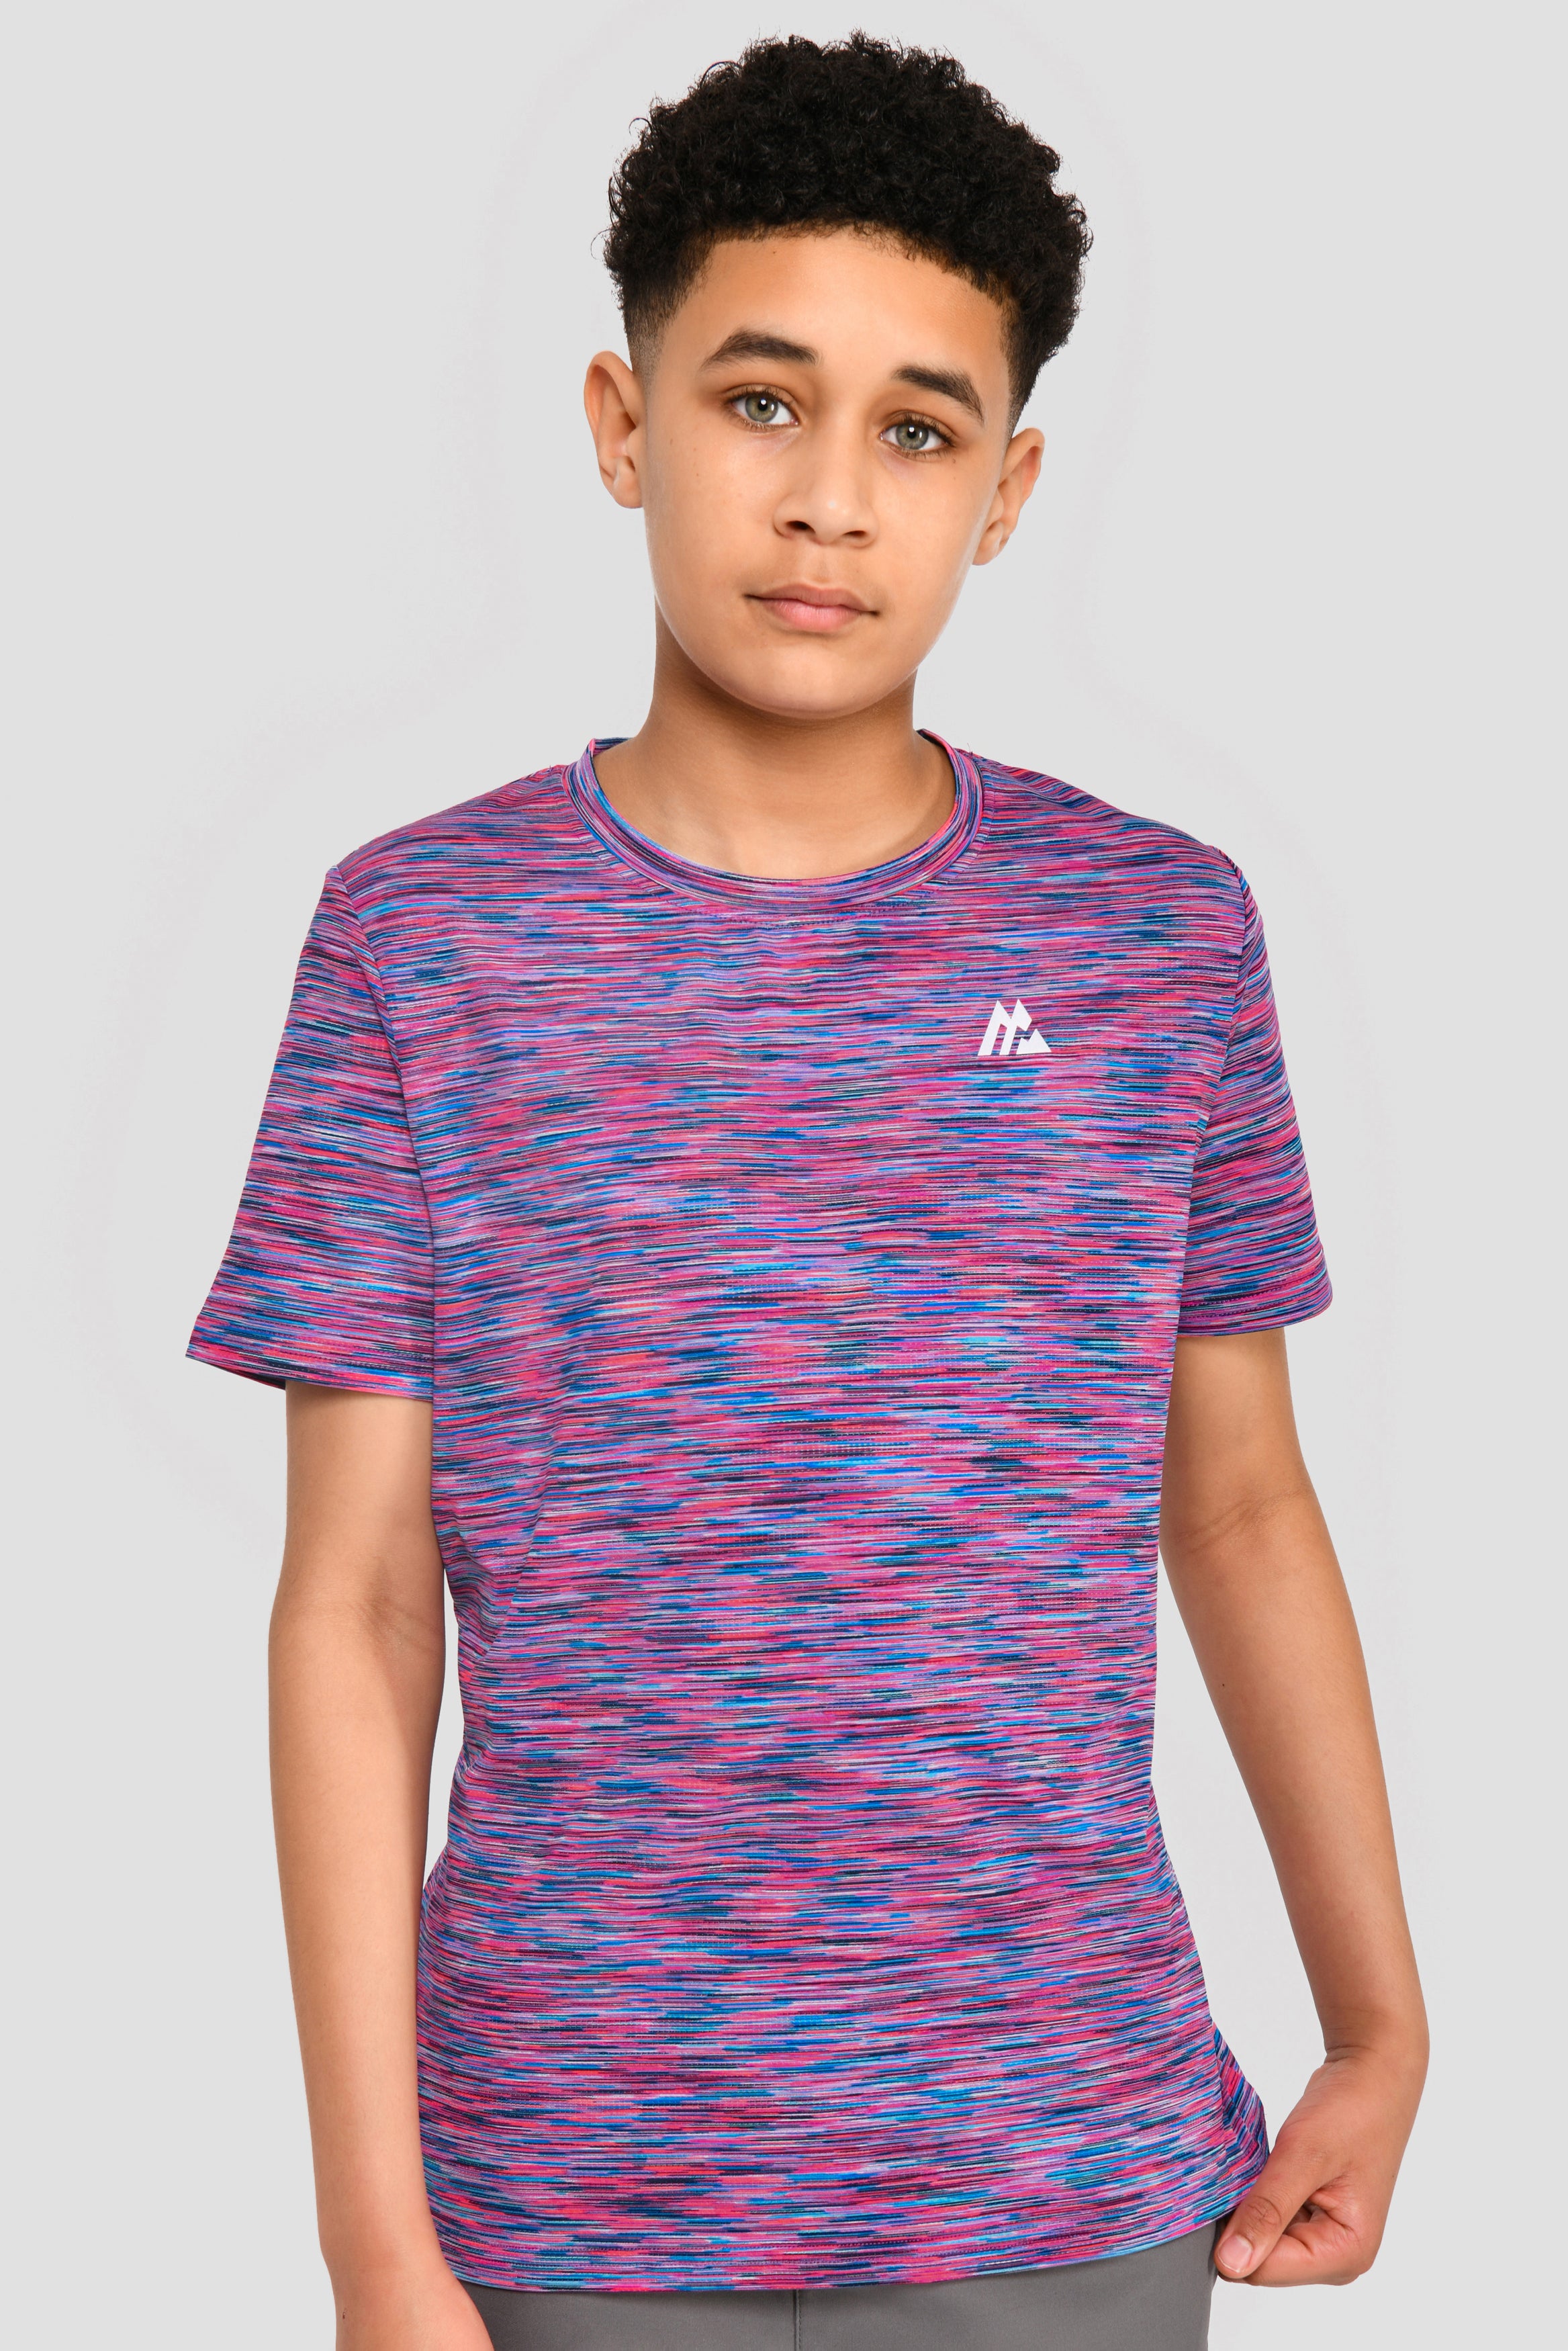 Junior Trail 2.0 T-Shirt - Navy/Pink